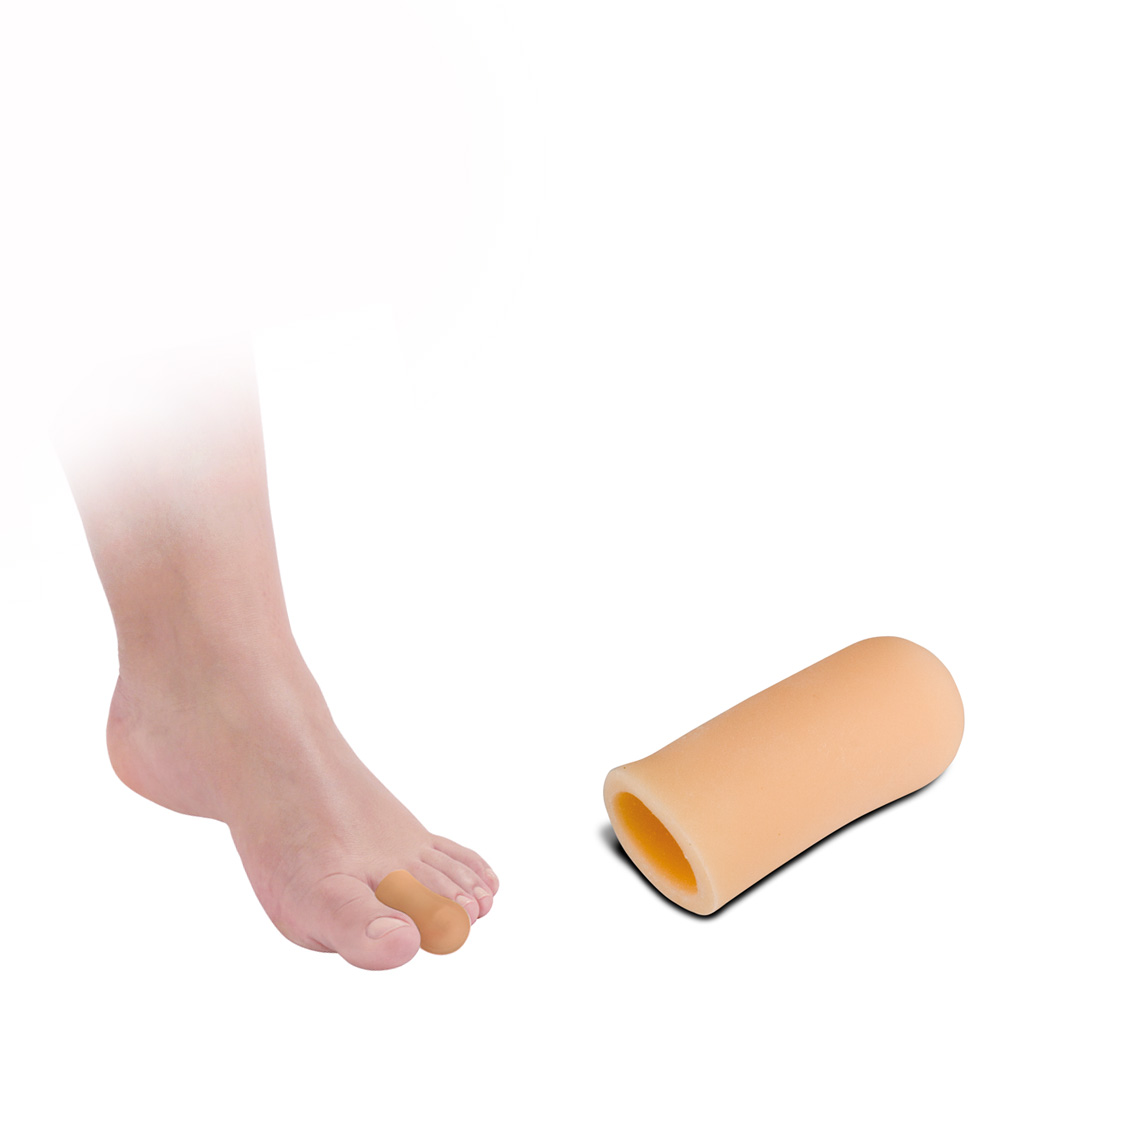 Toe protection skin